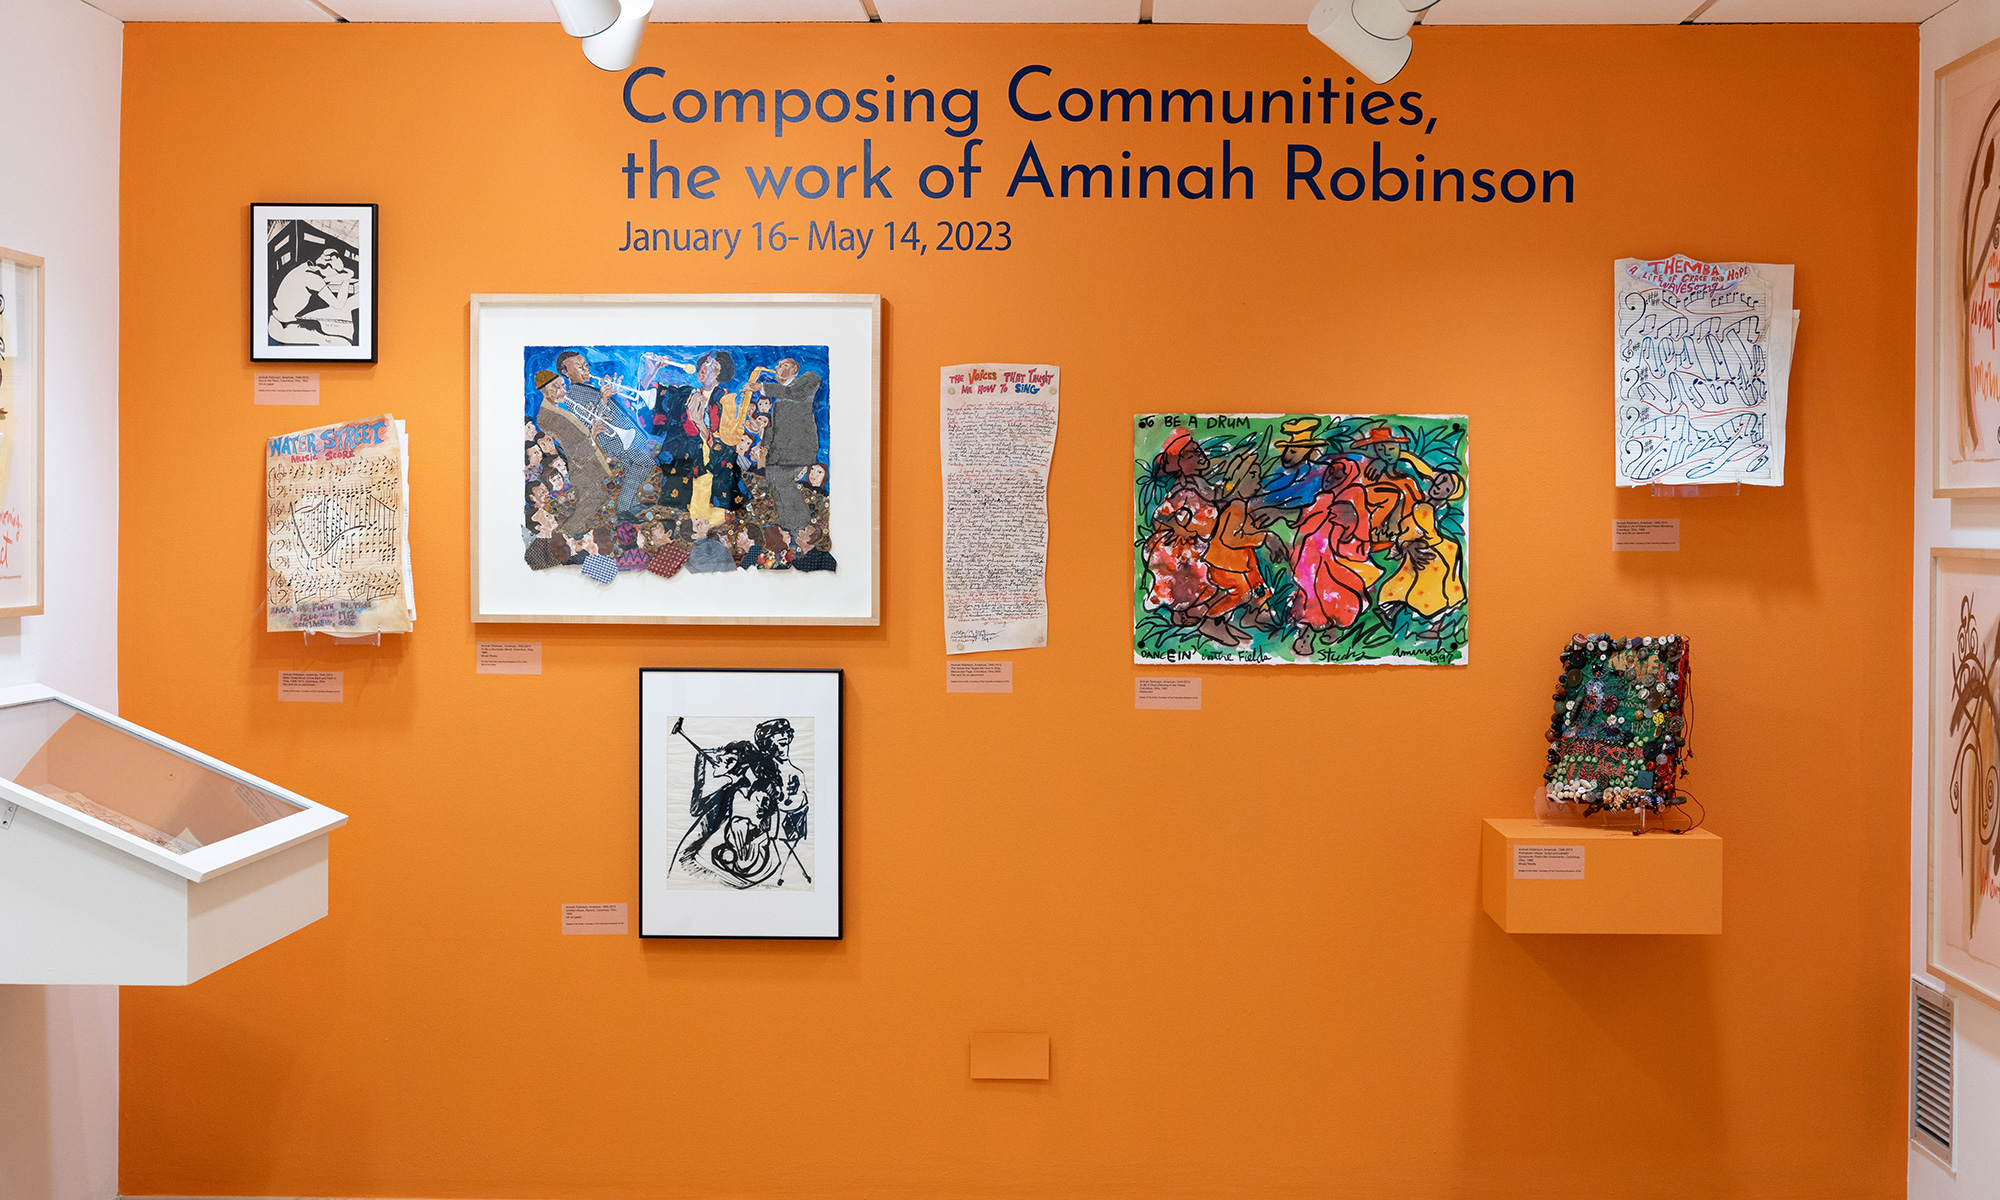 Aminah Robinson's artwork